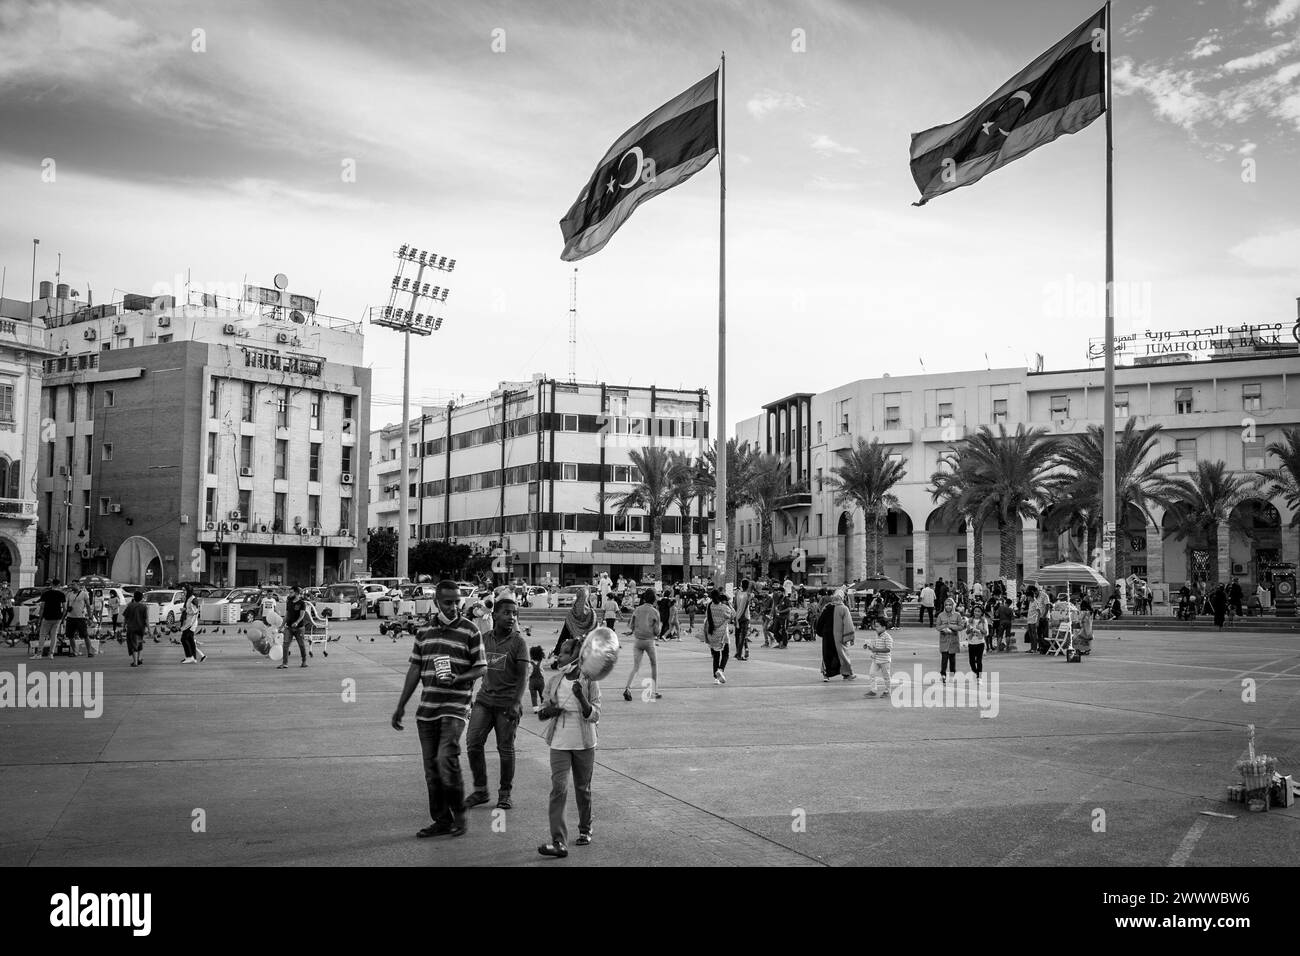 The Martyr's Square, Tripoli, Libya, 2021 Stock Photo